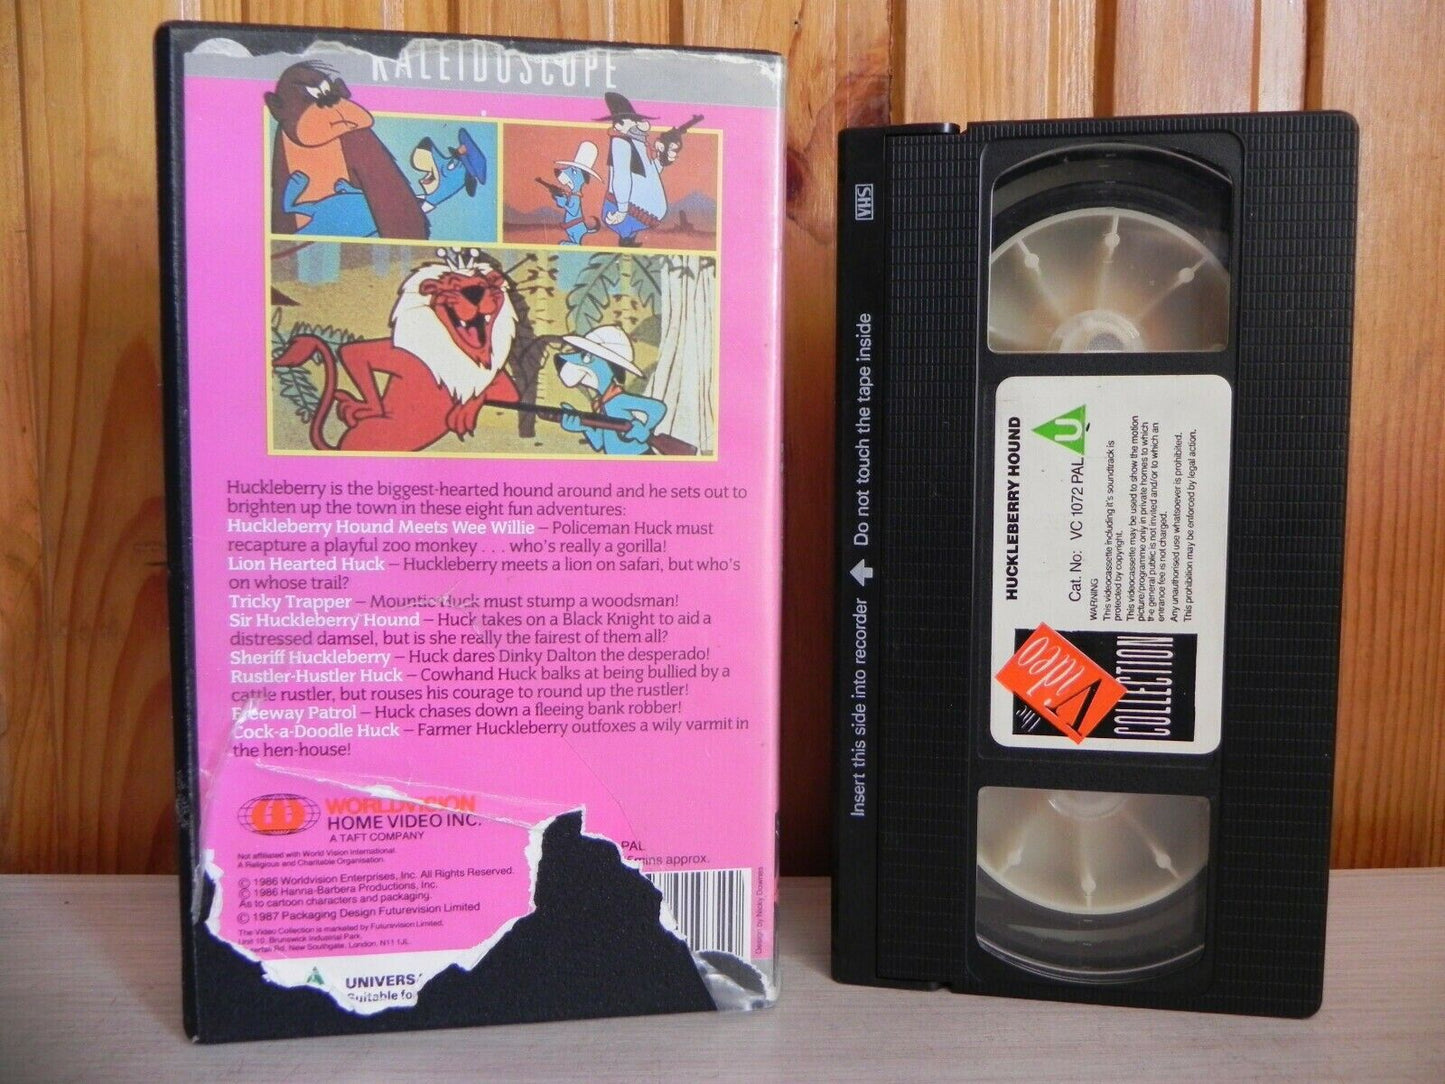 Huckelberry Hound Meets Wee Willie' - Hanna Barbera - Cartoon - Kids - Pal VHS